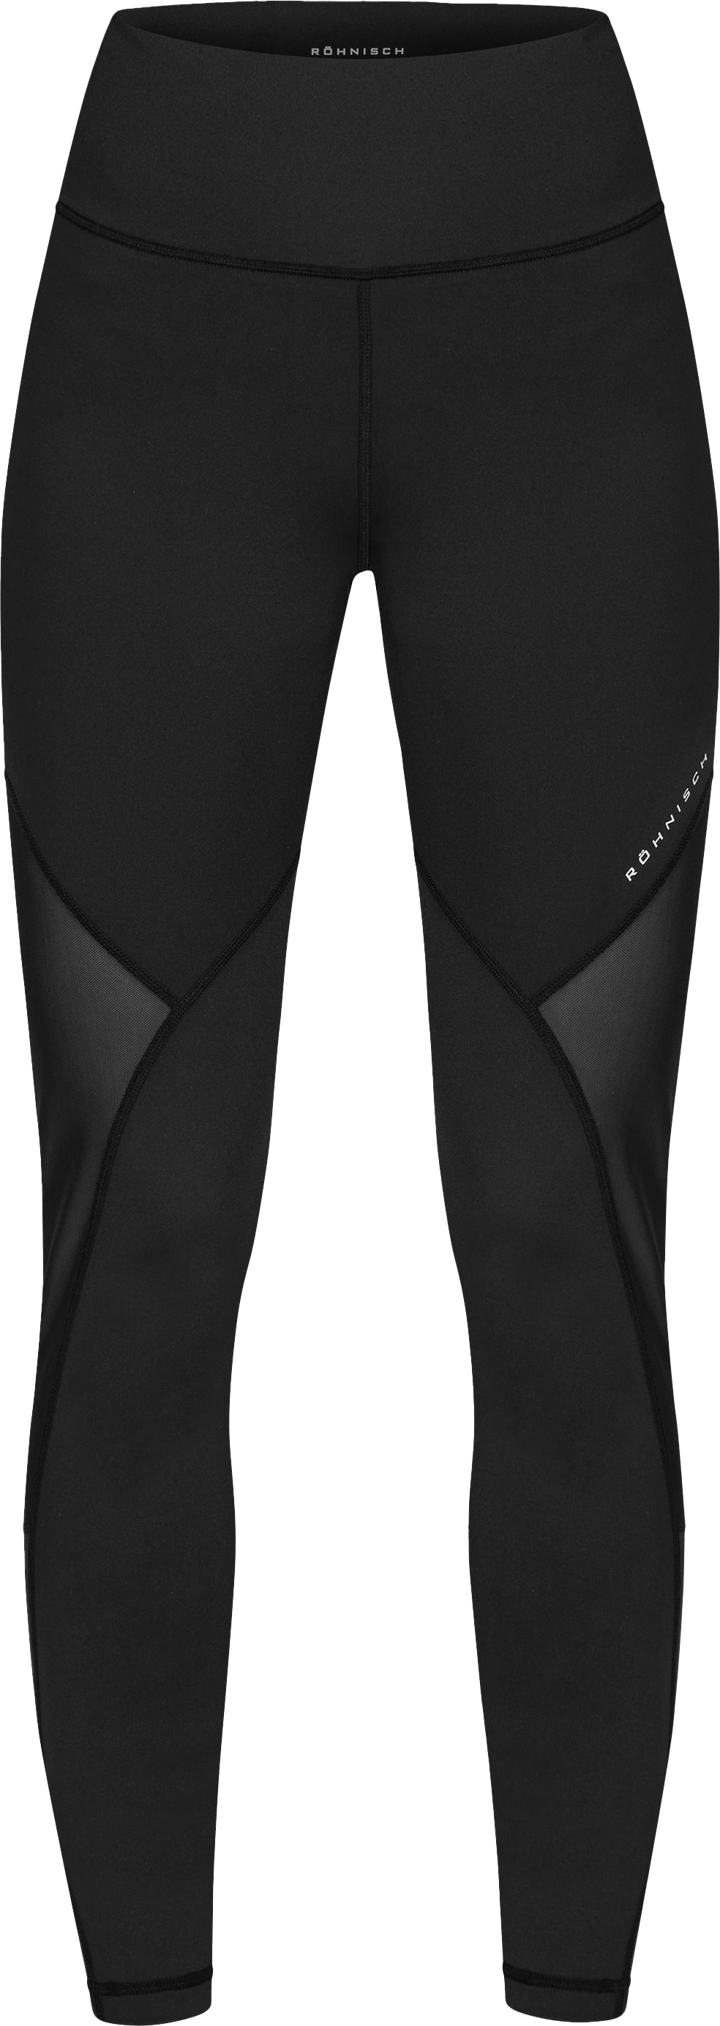 https://www.fjellsport.no/assets/blobs/rohnisch-women-s-motion-mesh-tights-black-6bda42bec8.png?preset=tiny&dpr=2